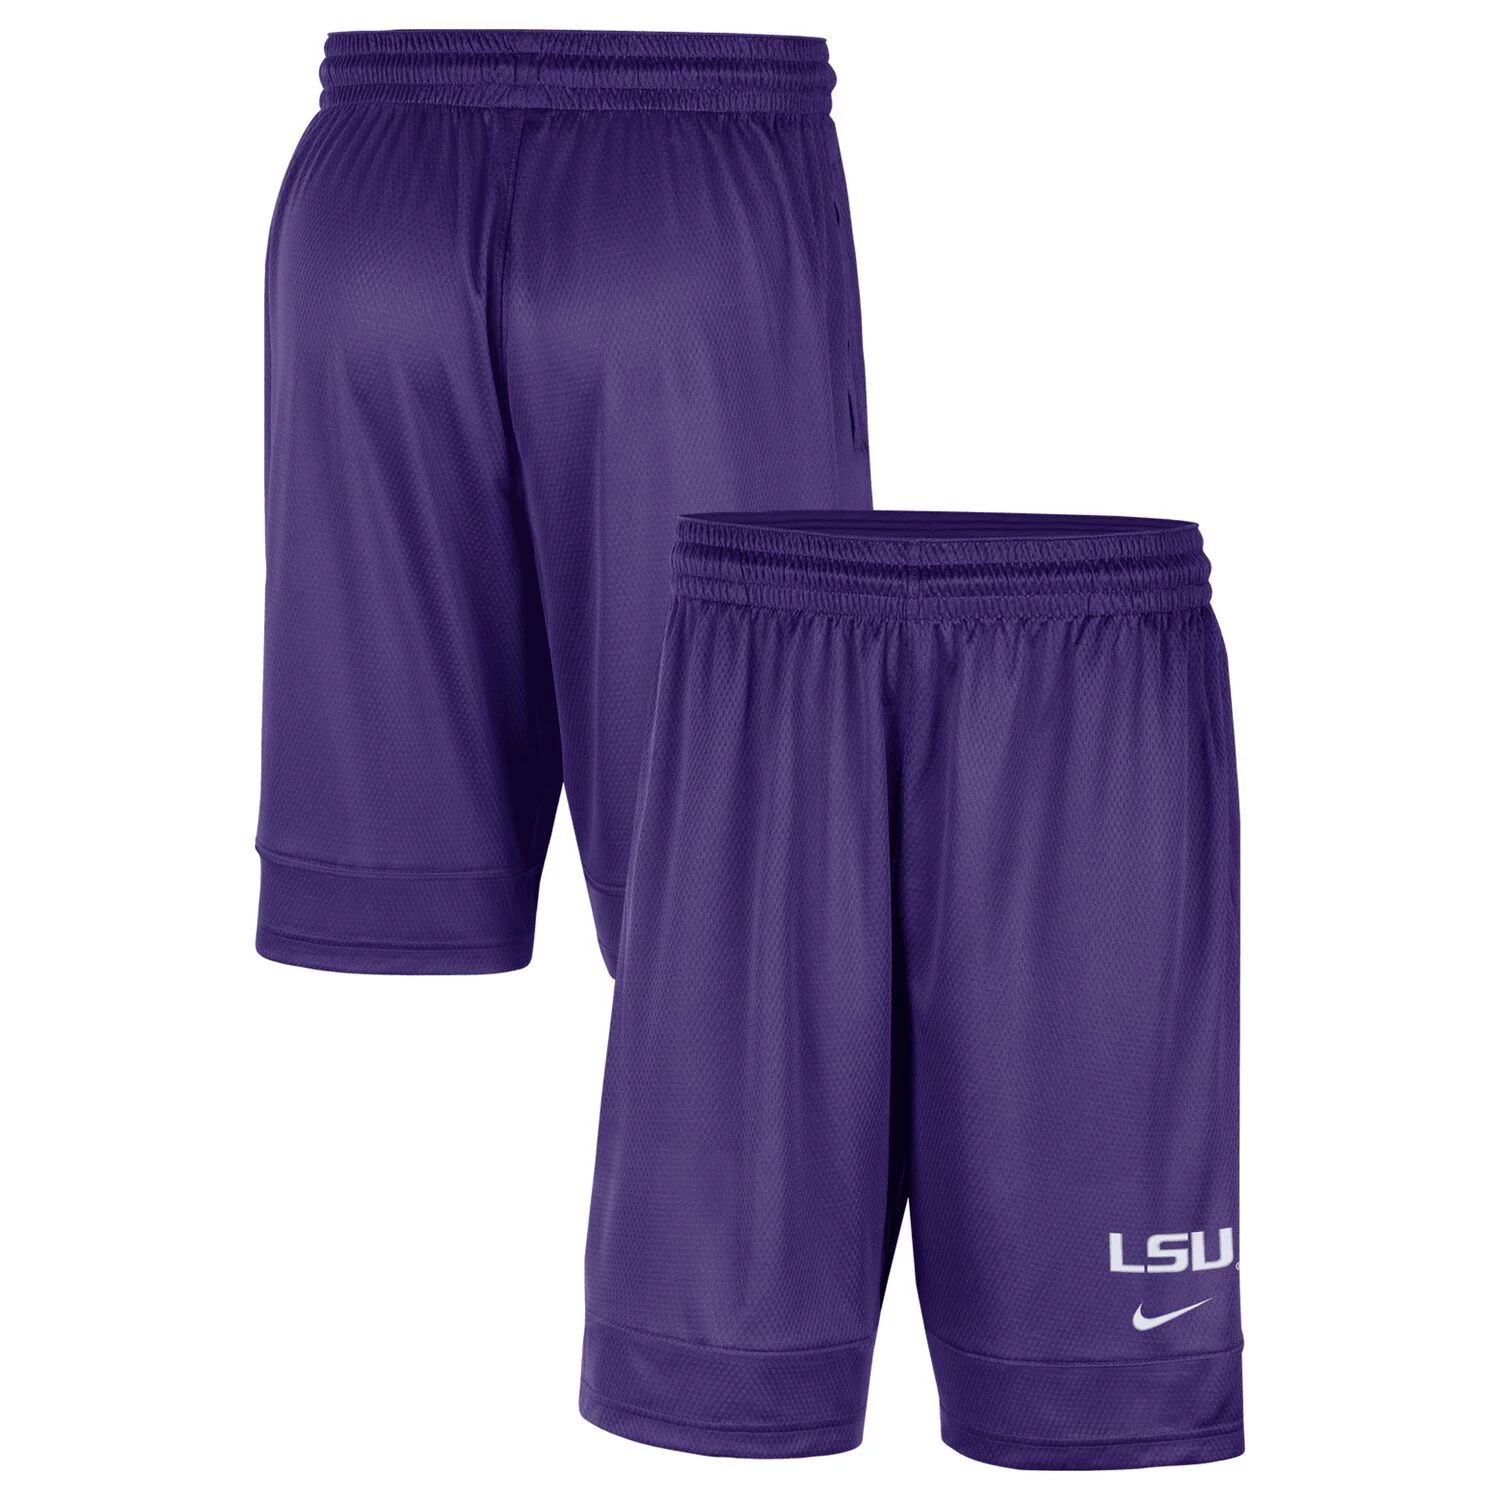 Мужские фиолетовые шорты LSU Tigers Fast Break Team Performance Nike